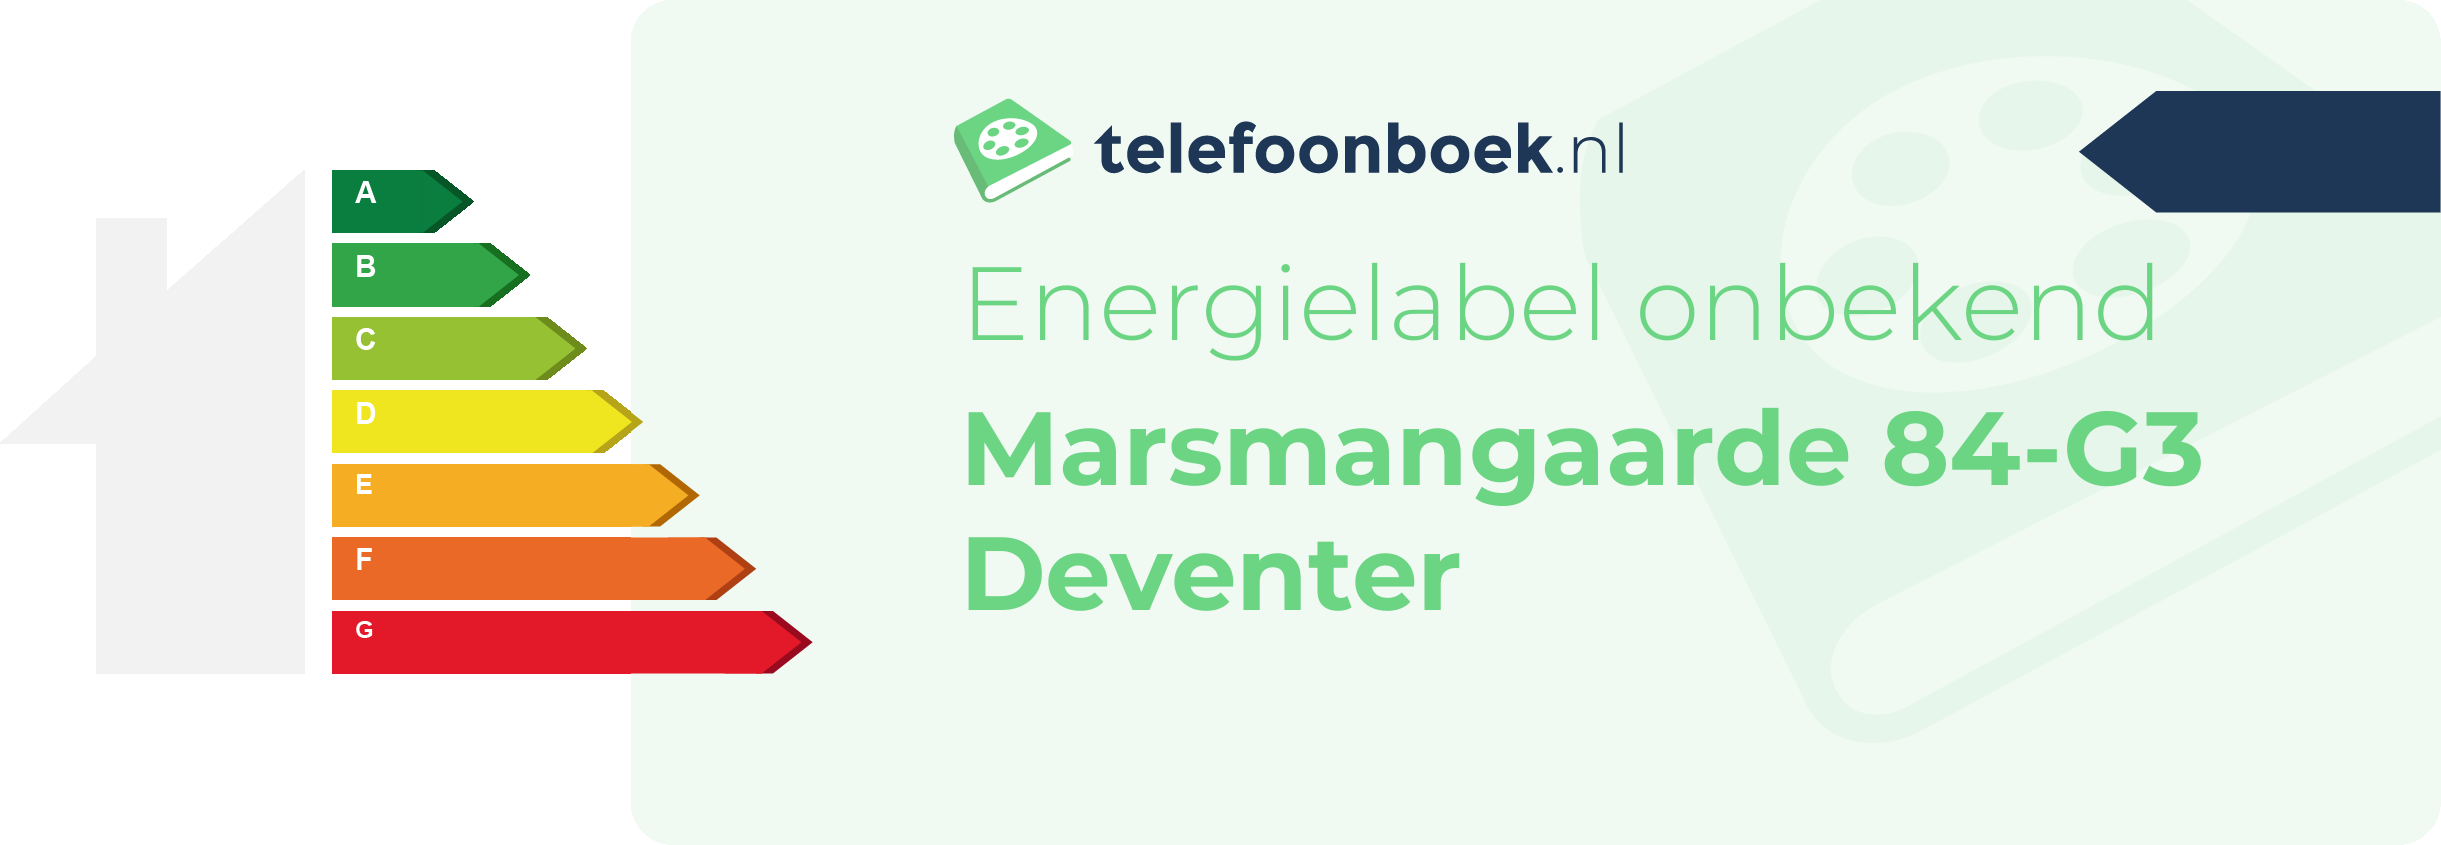 Energielabel Marsmangaarde 84-G3 Deventer